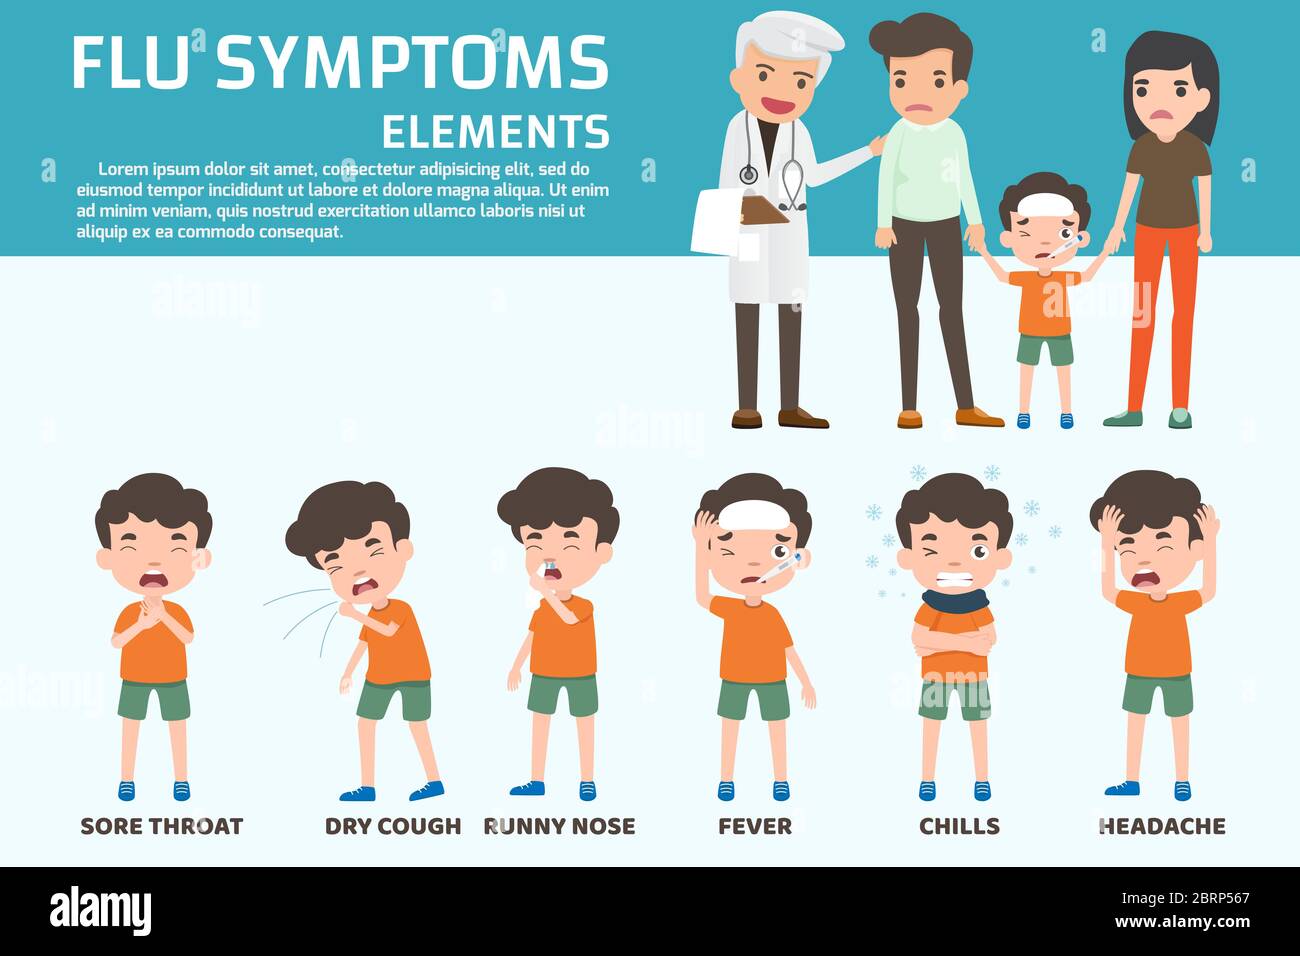 Influenza symptoms infographic. Kids that have flu symptoms various